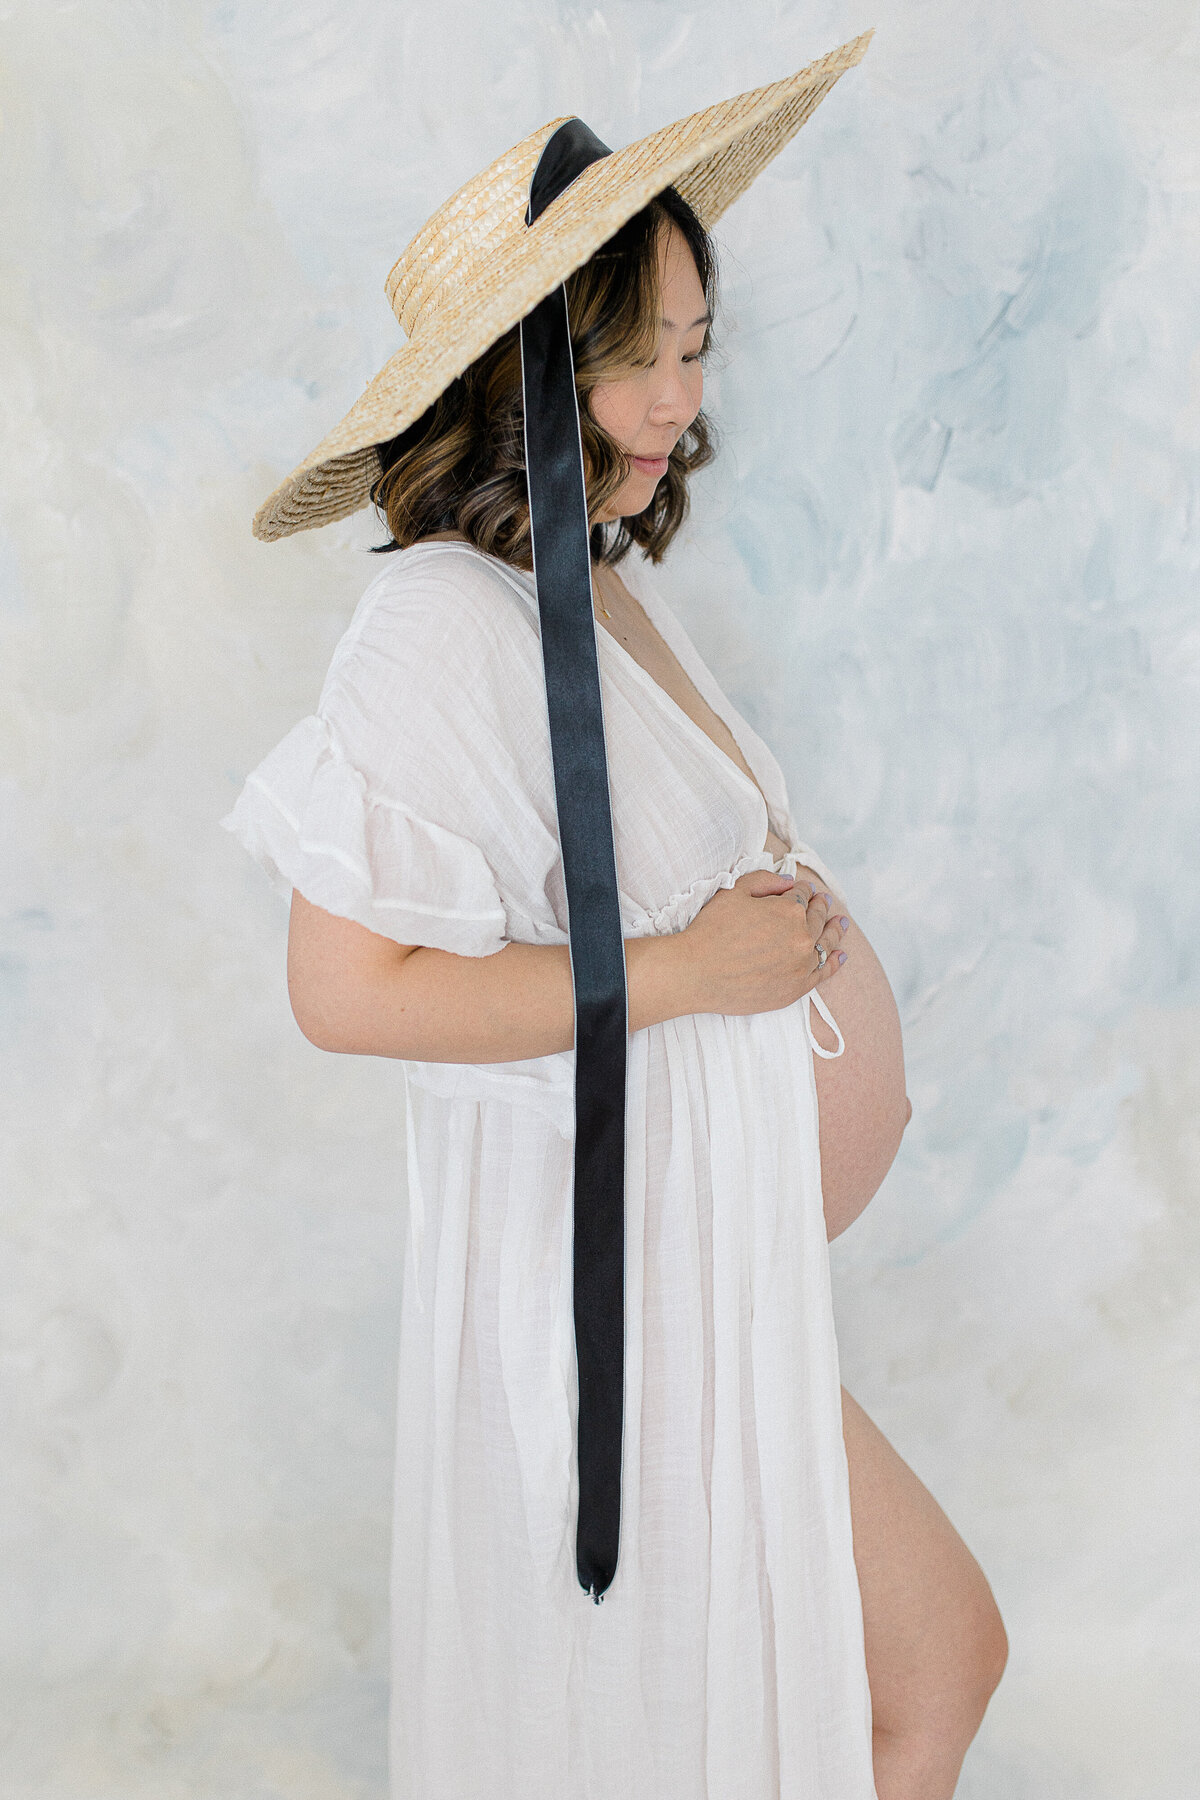 audra-jones-photography-fine-art-boudoir-maternity-eva-110